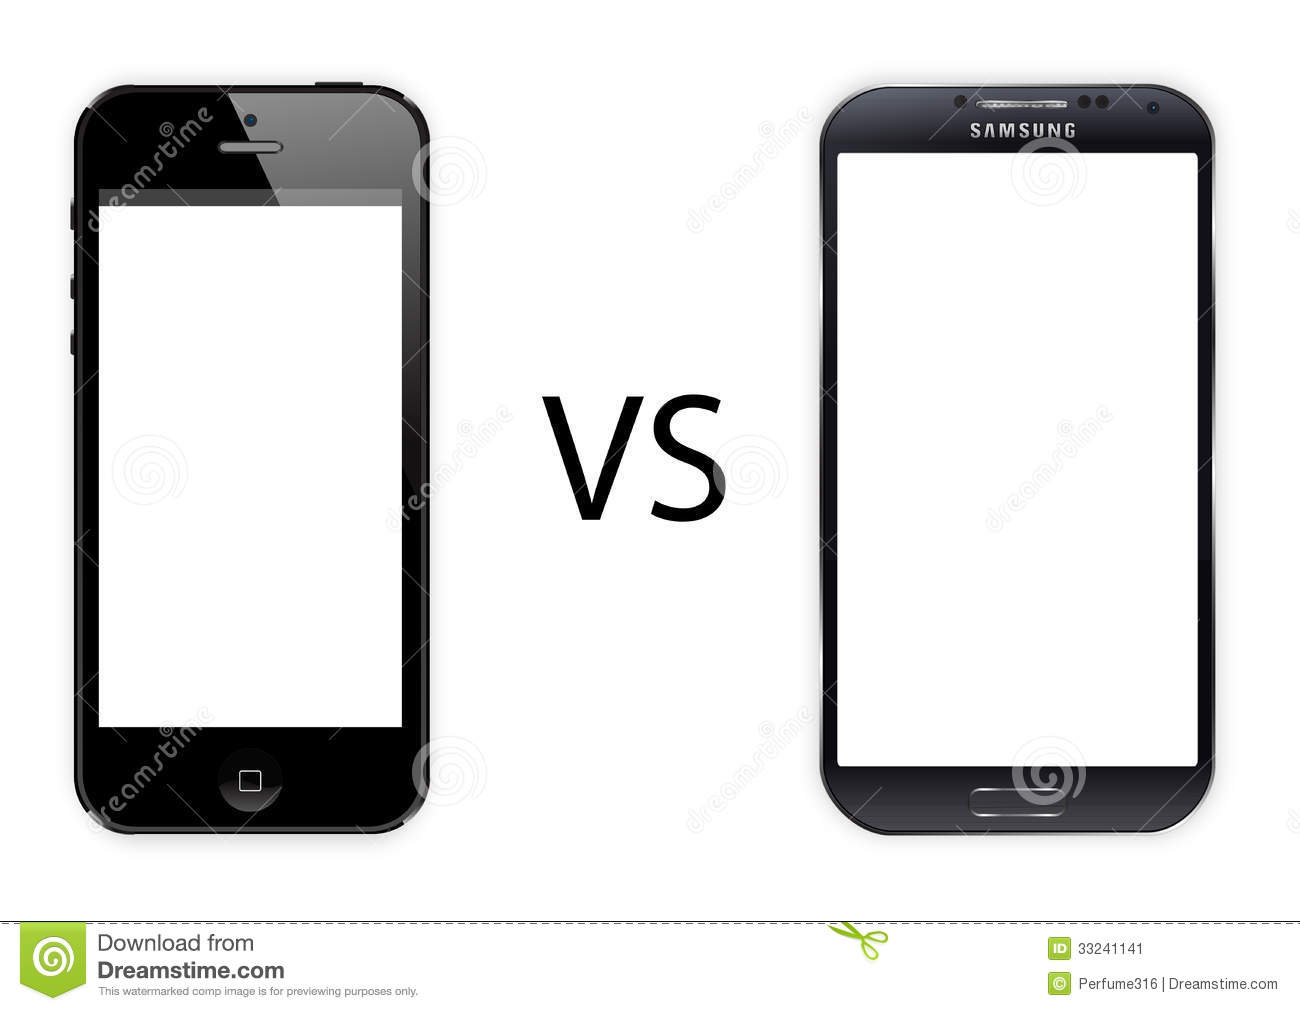 Iphone 5 Vs Samsung Galaxy S4 Editorial Photo   Image  33241141